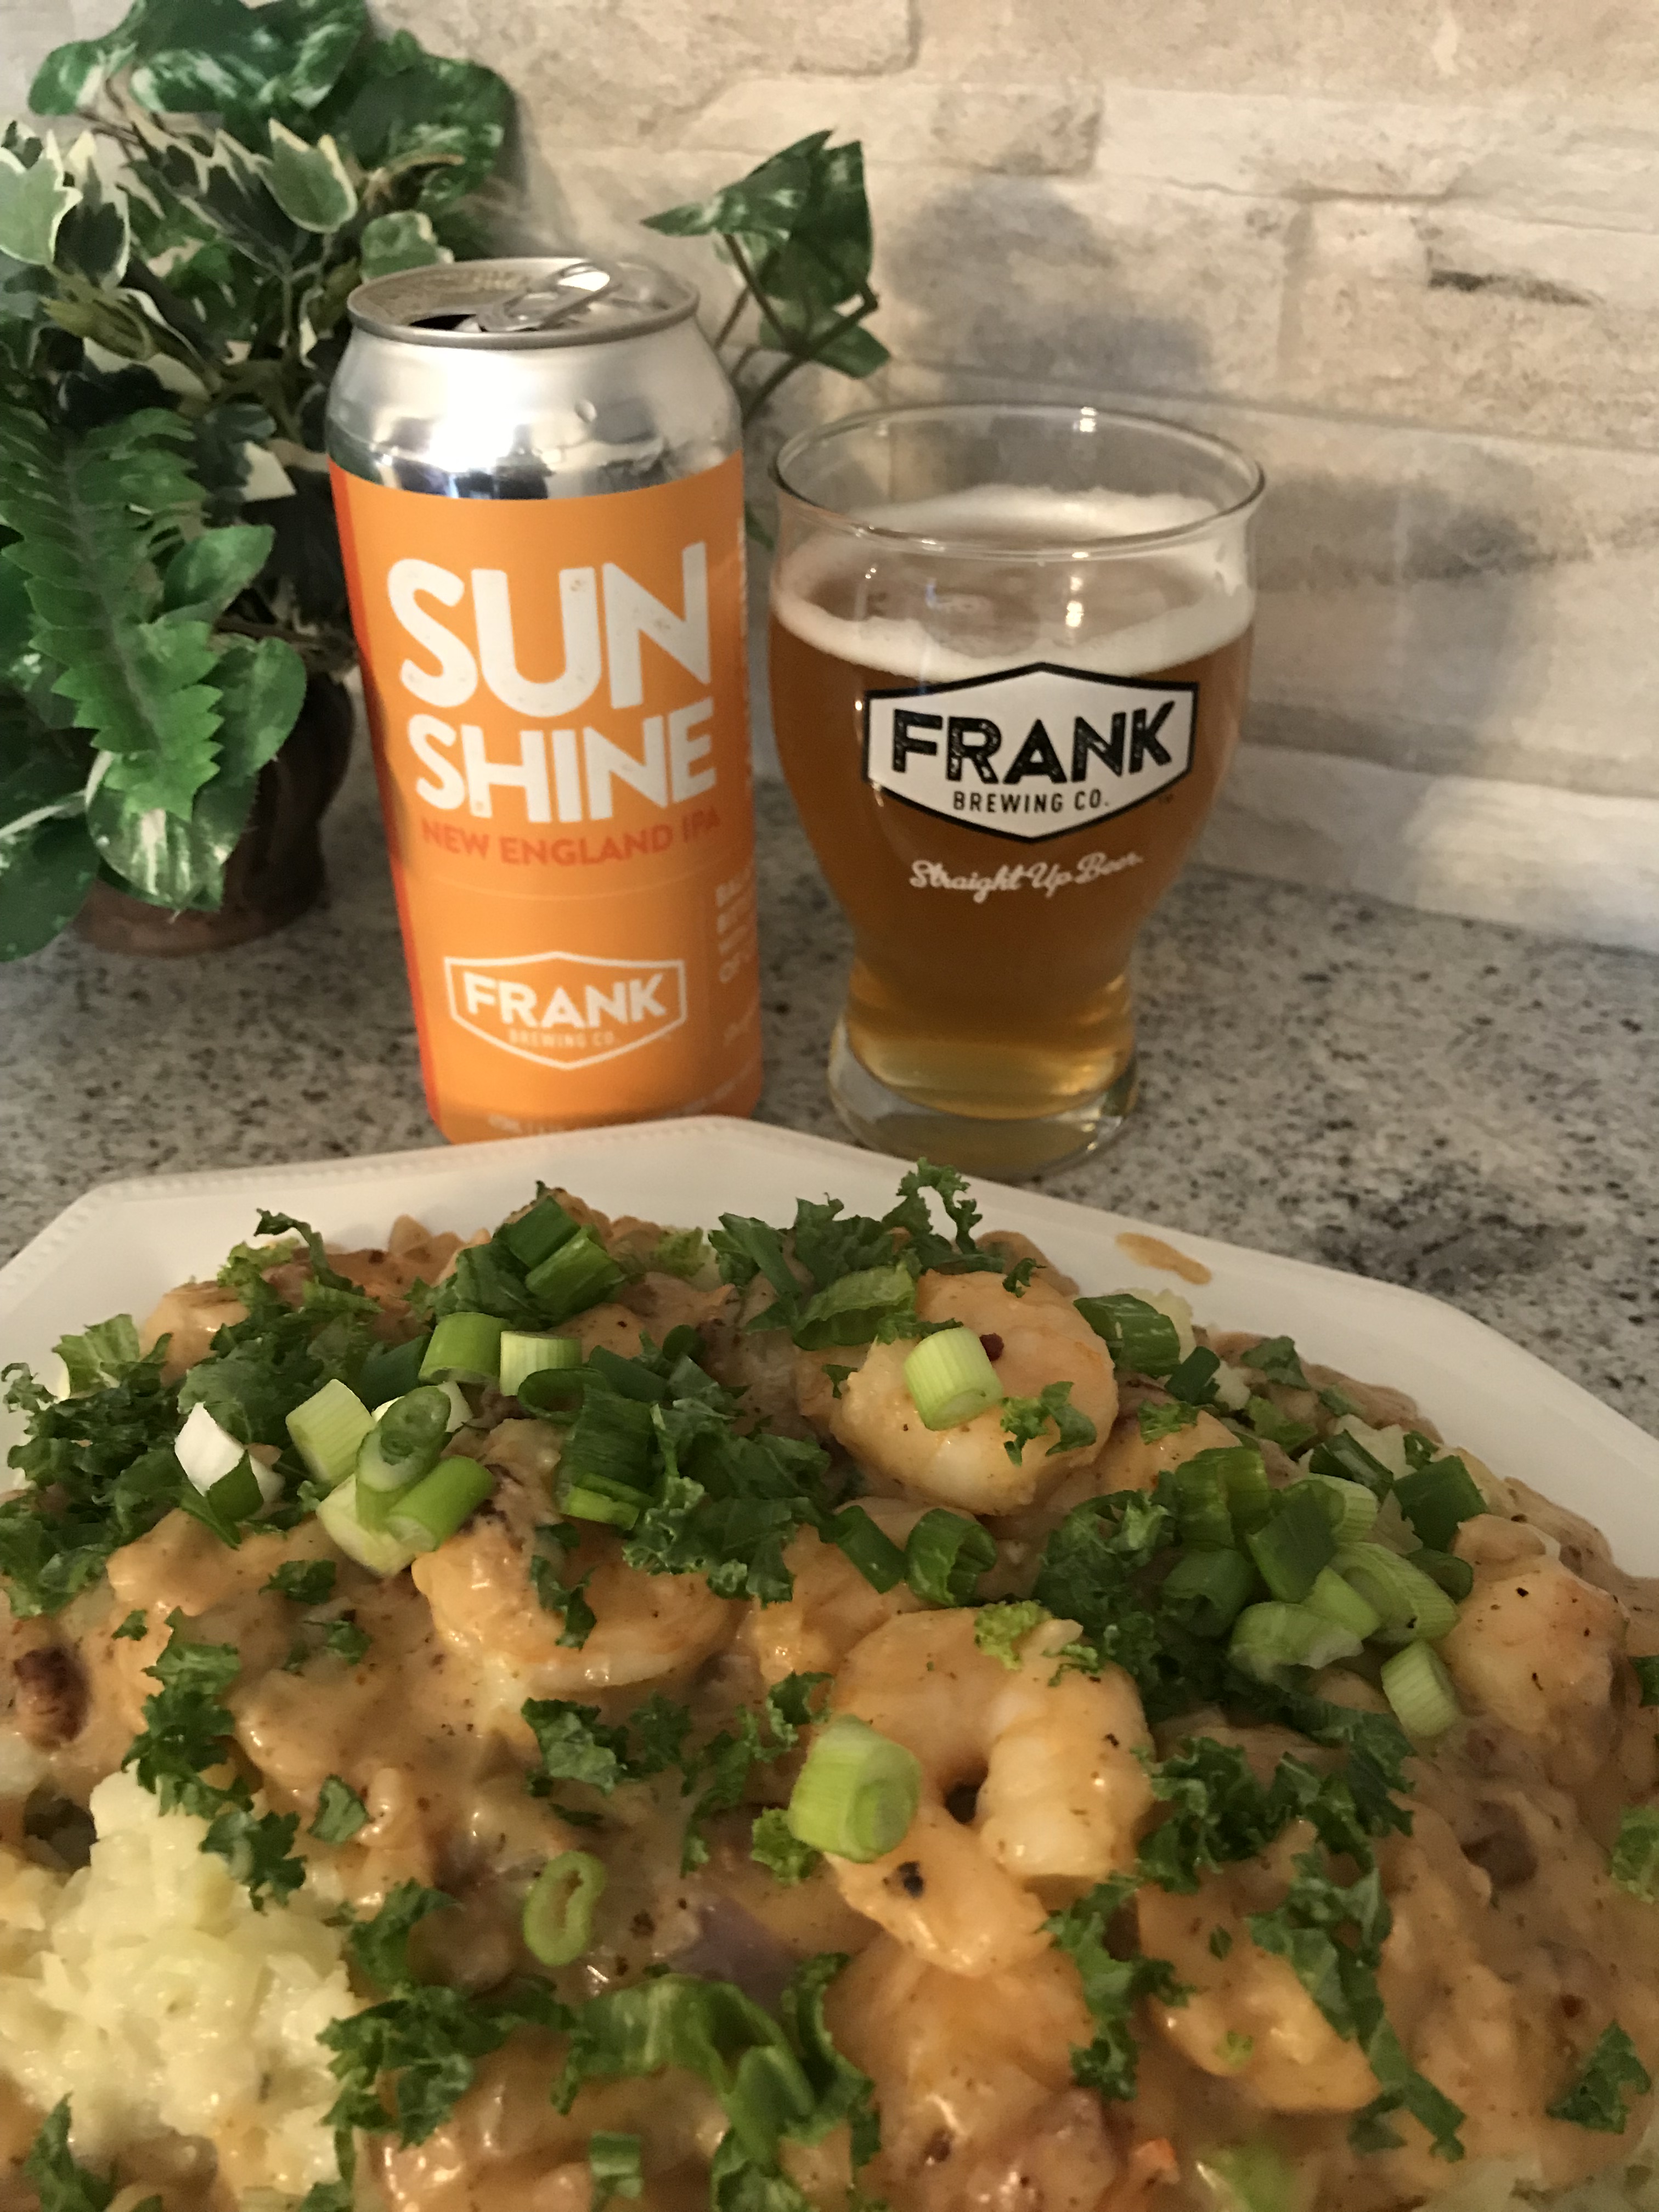 Frank Brewing Co. New England Sunshine IPA with Cheesy Shrimp and Cauliflower Mash.